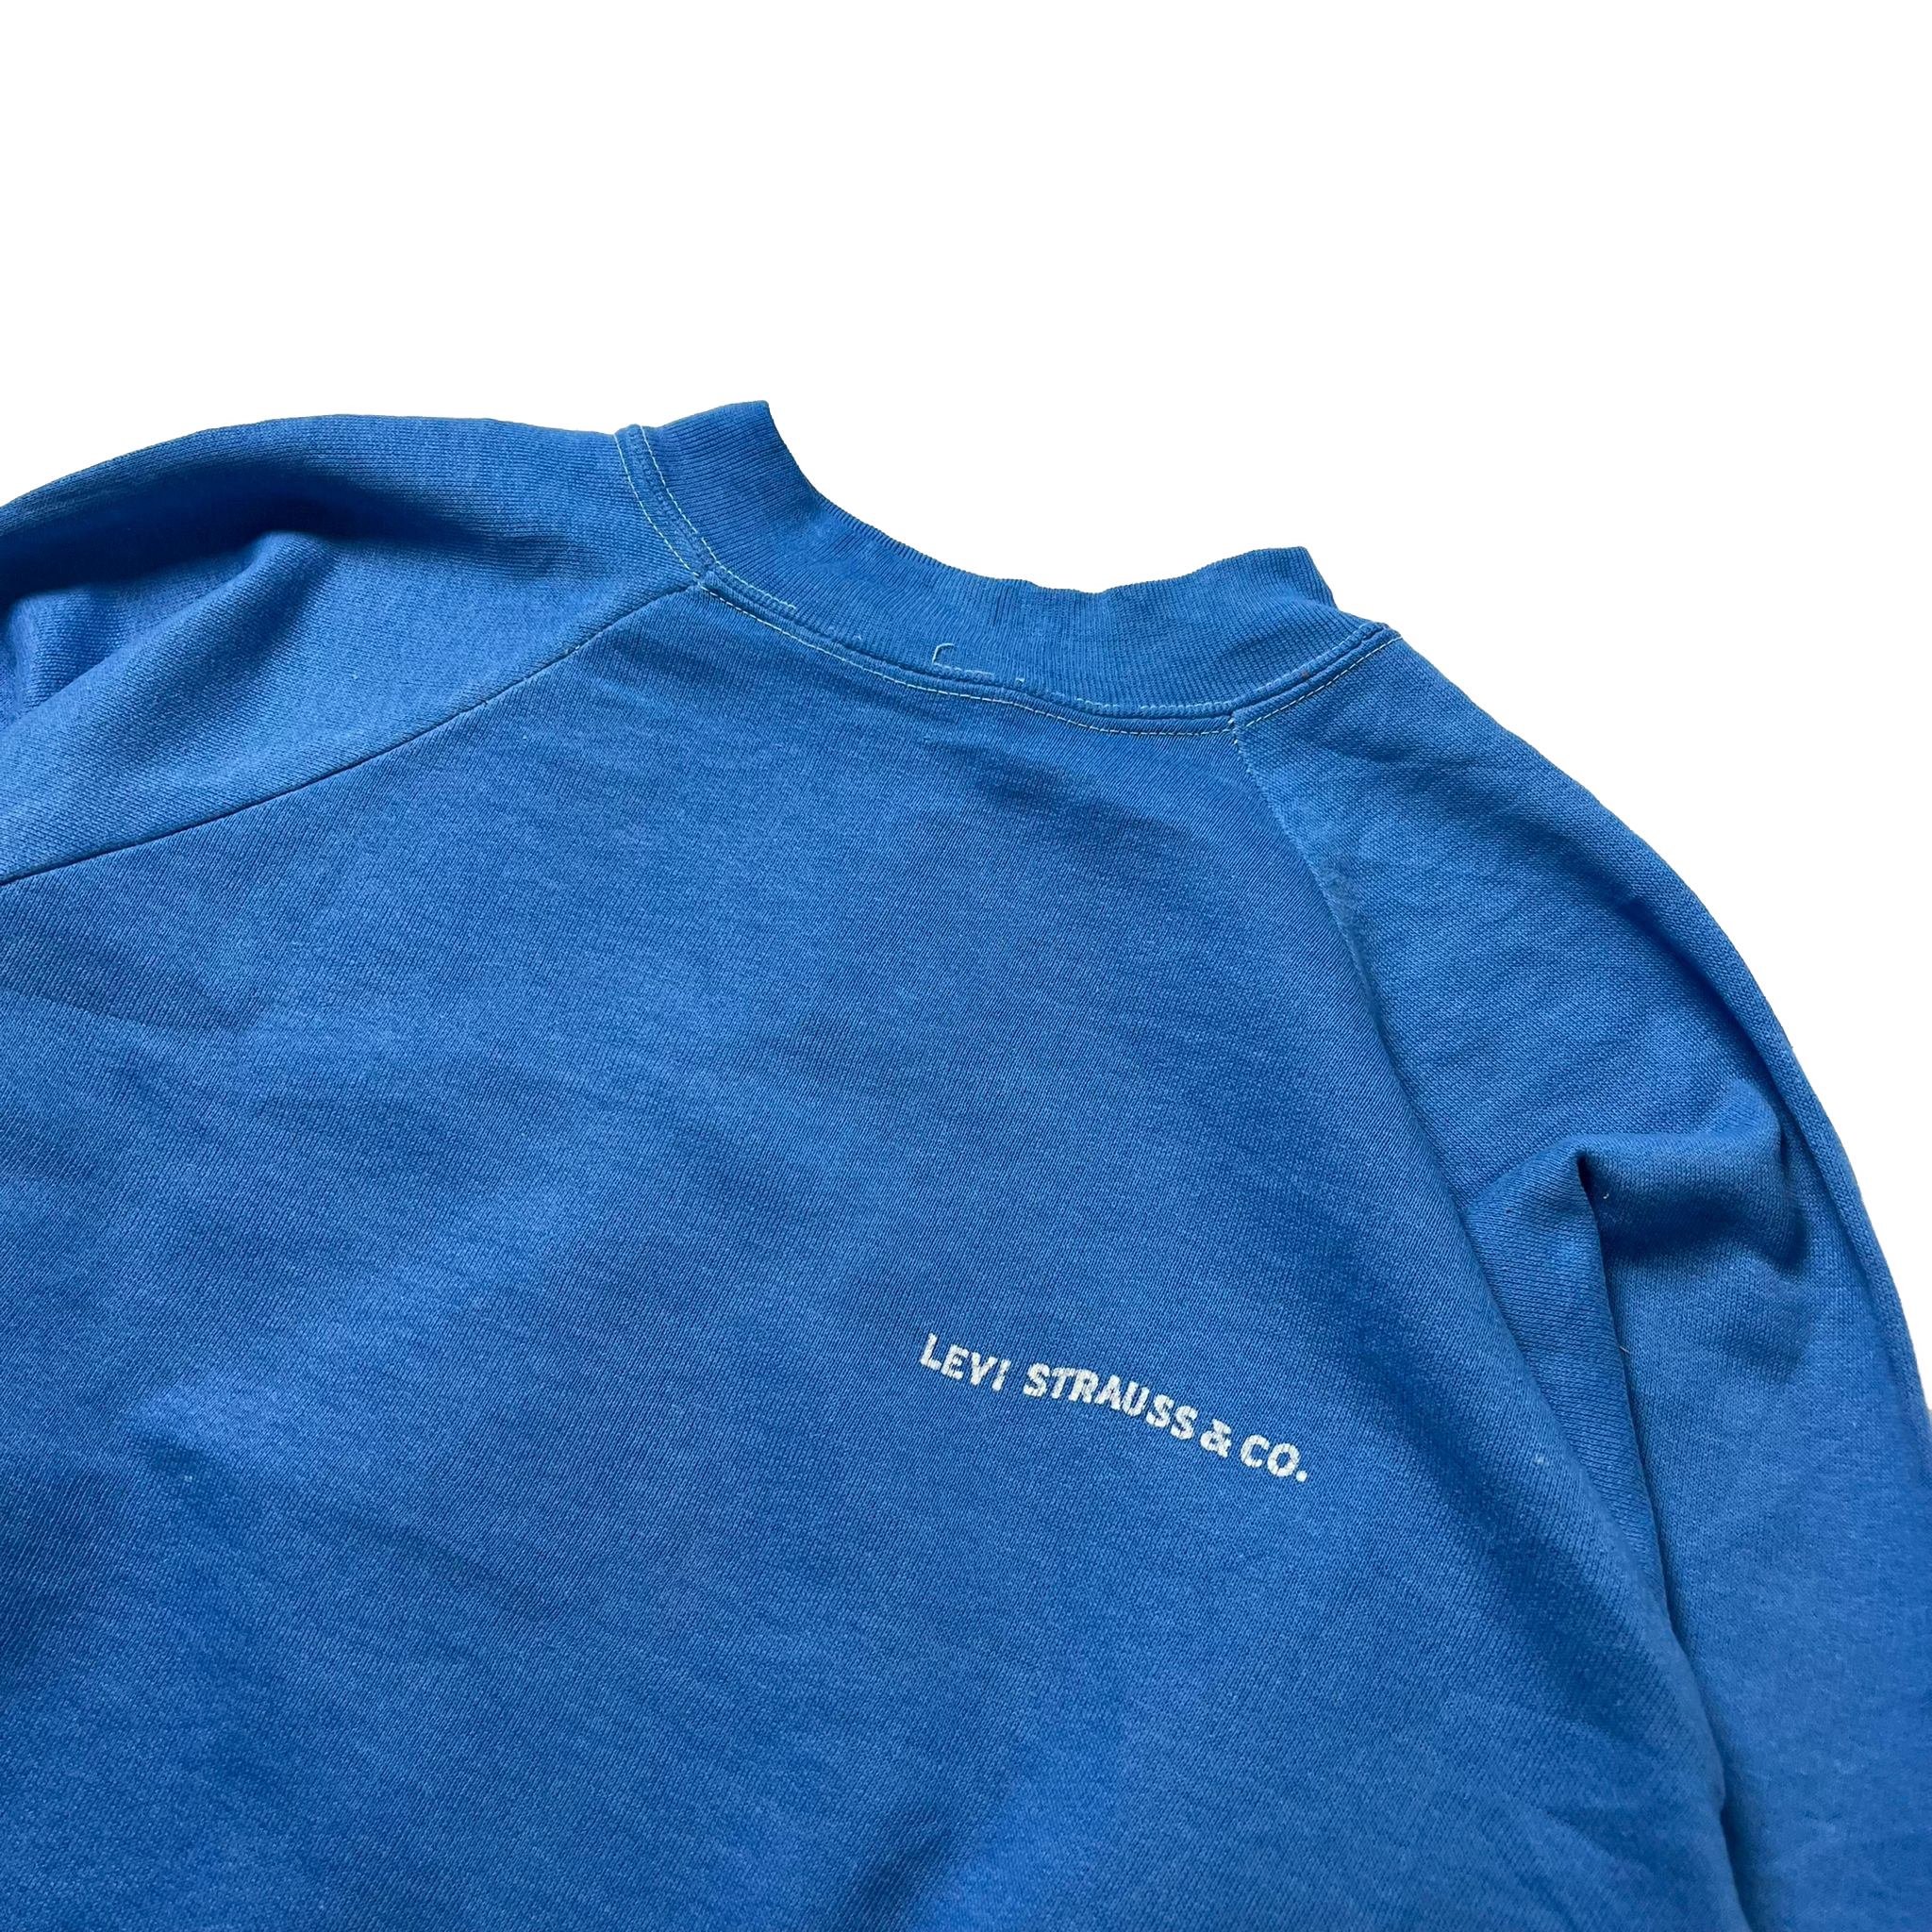 90's Levi's sweatshirt